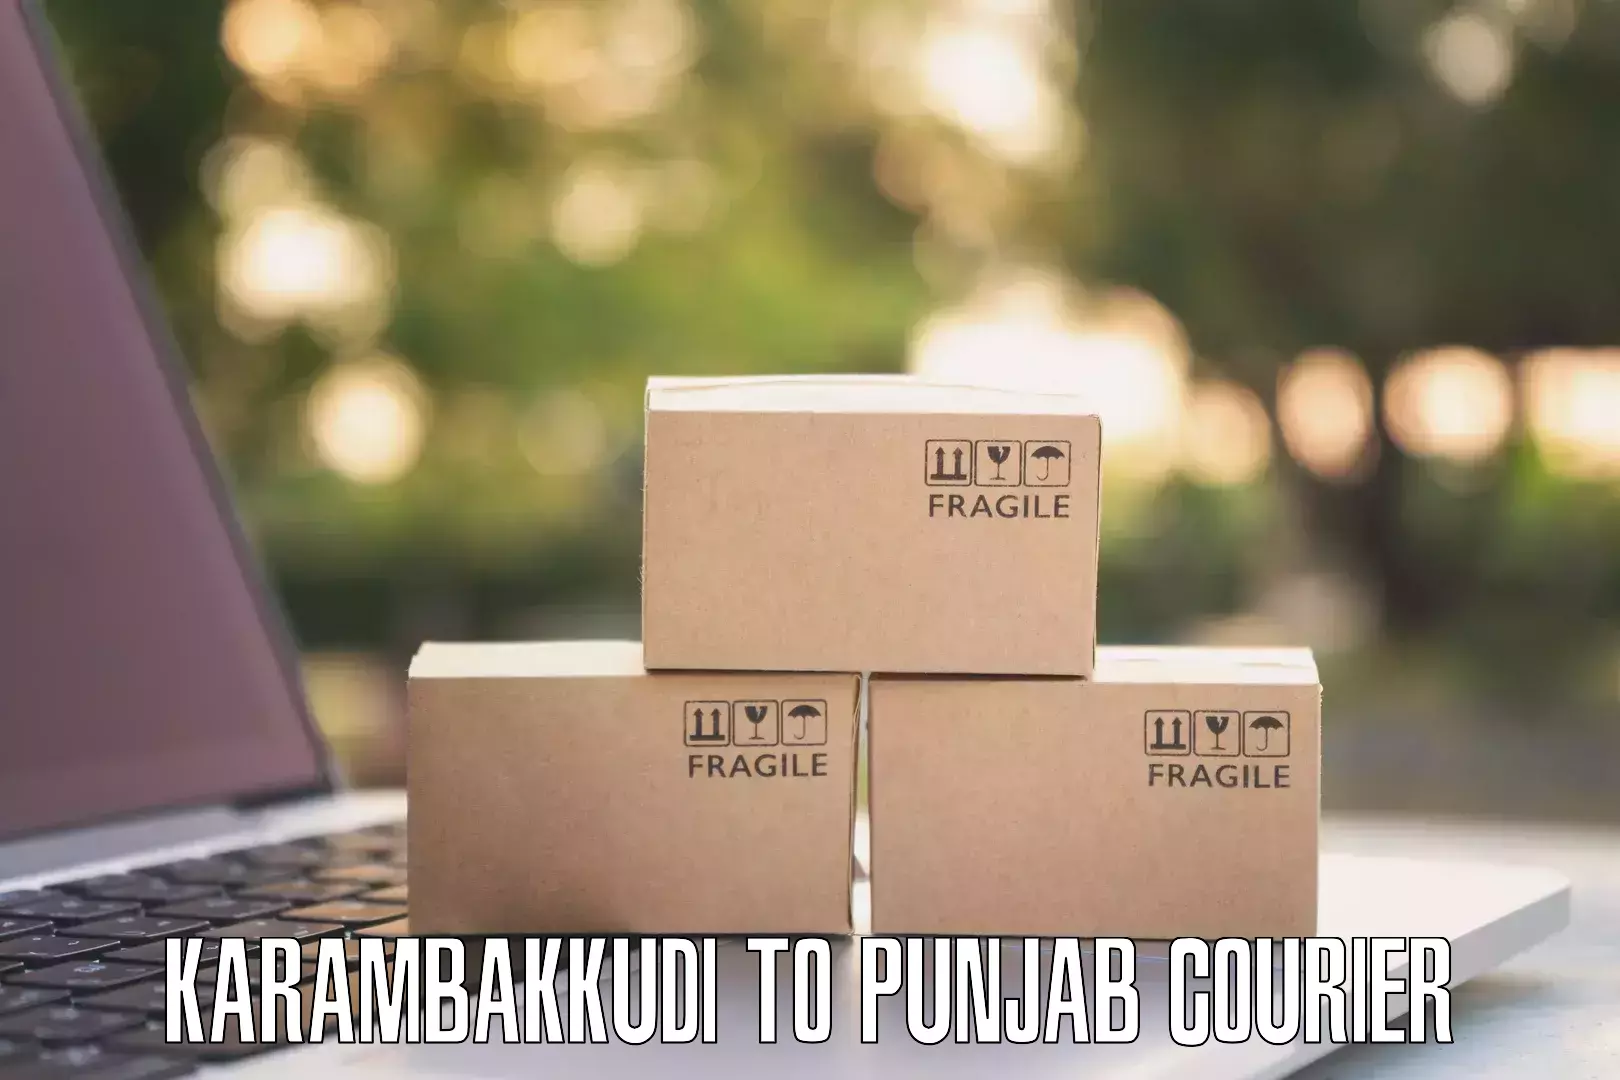 Easy access courier services Karambakkudi to Pathankot